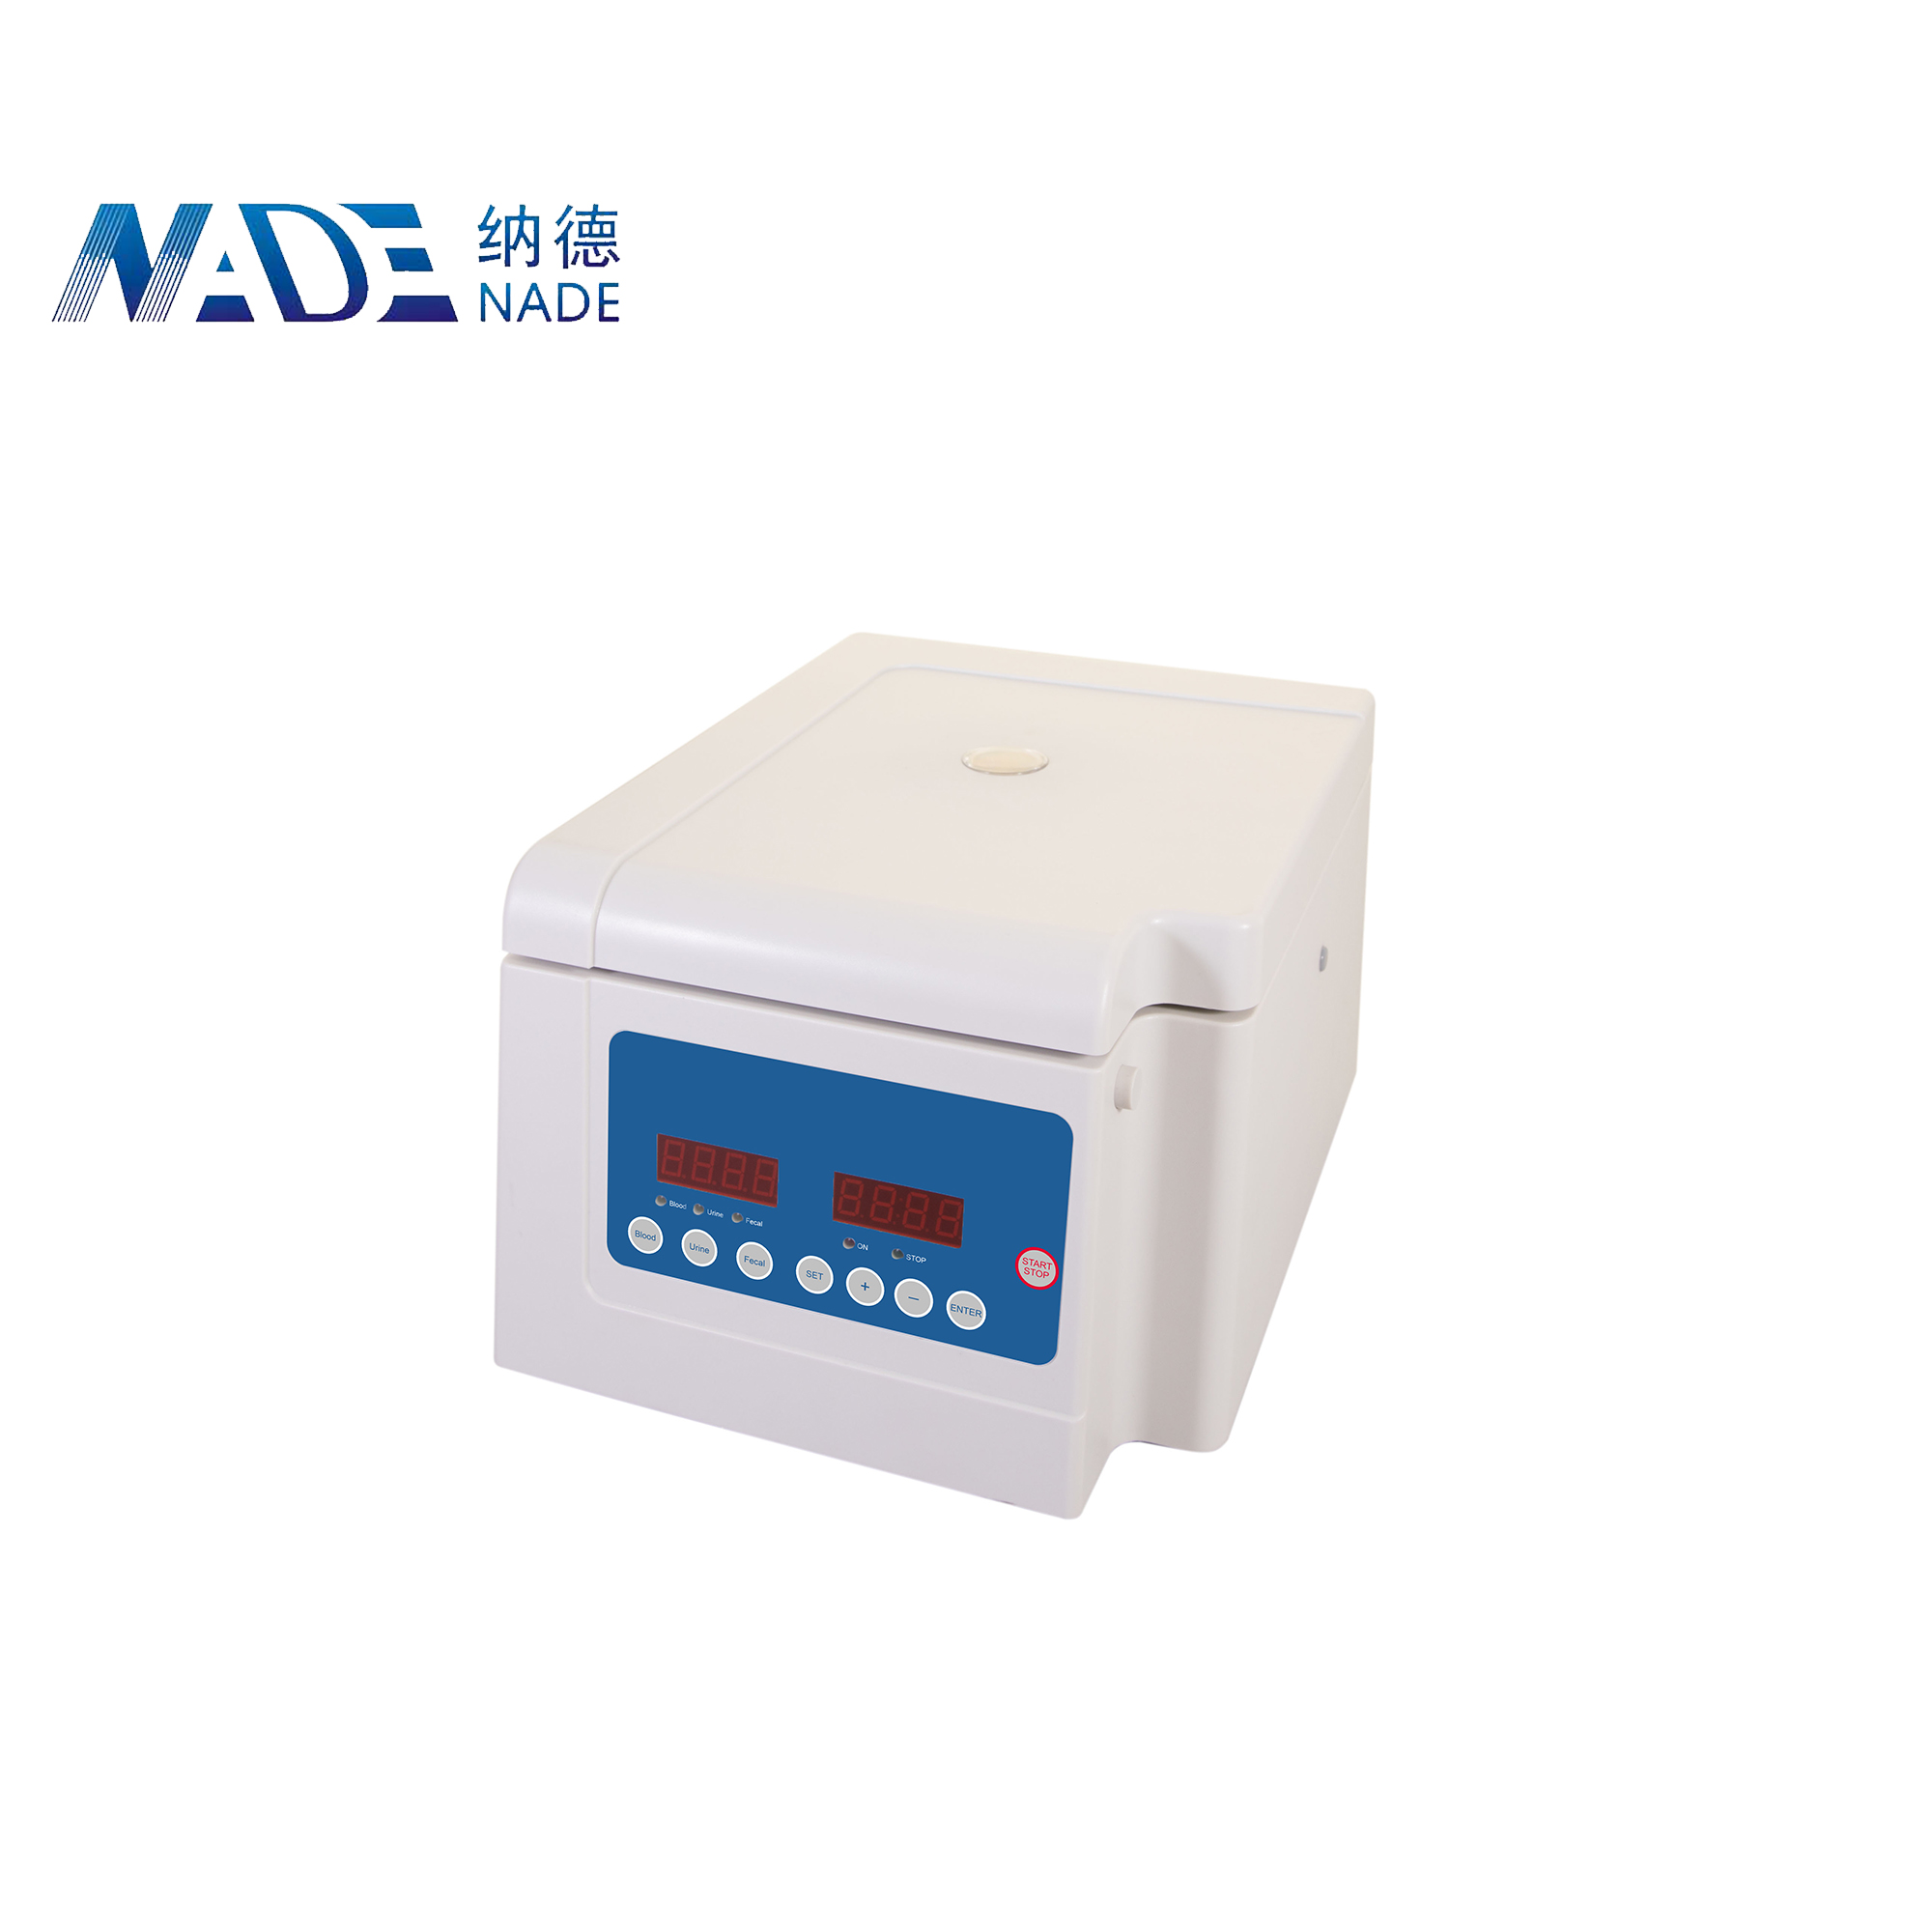 NADE DM0408 laboratory Low-speed Centrifuge 4000rpm LED display for separation of serum,plasma, urine, fecal samples